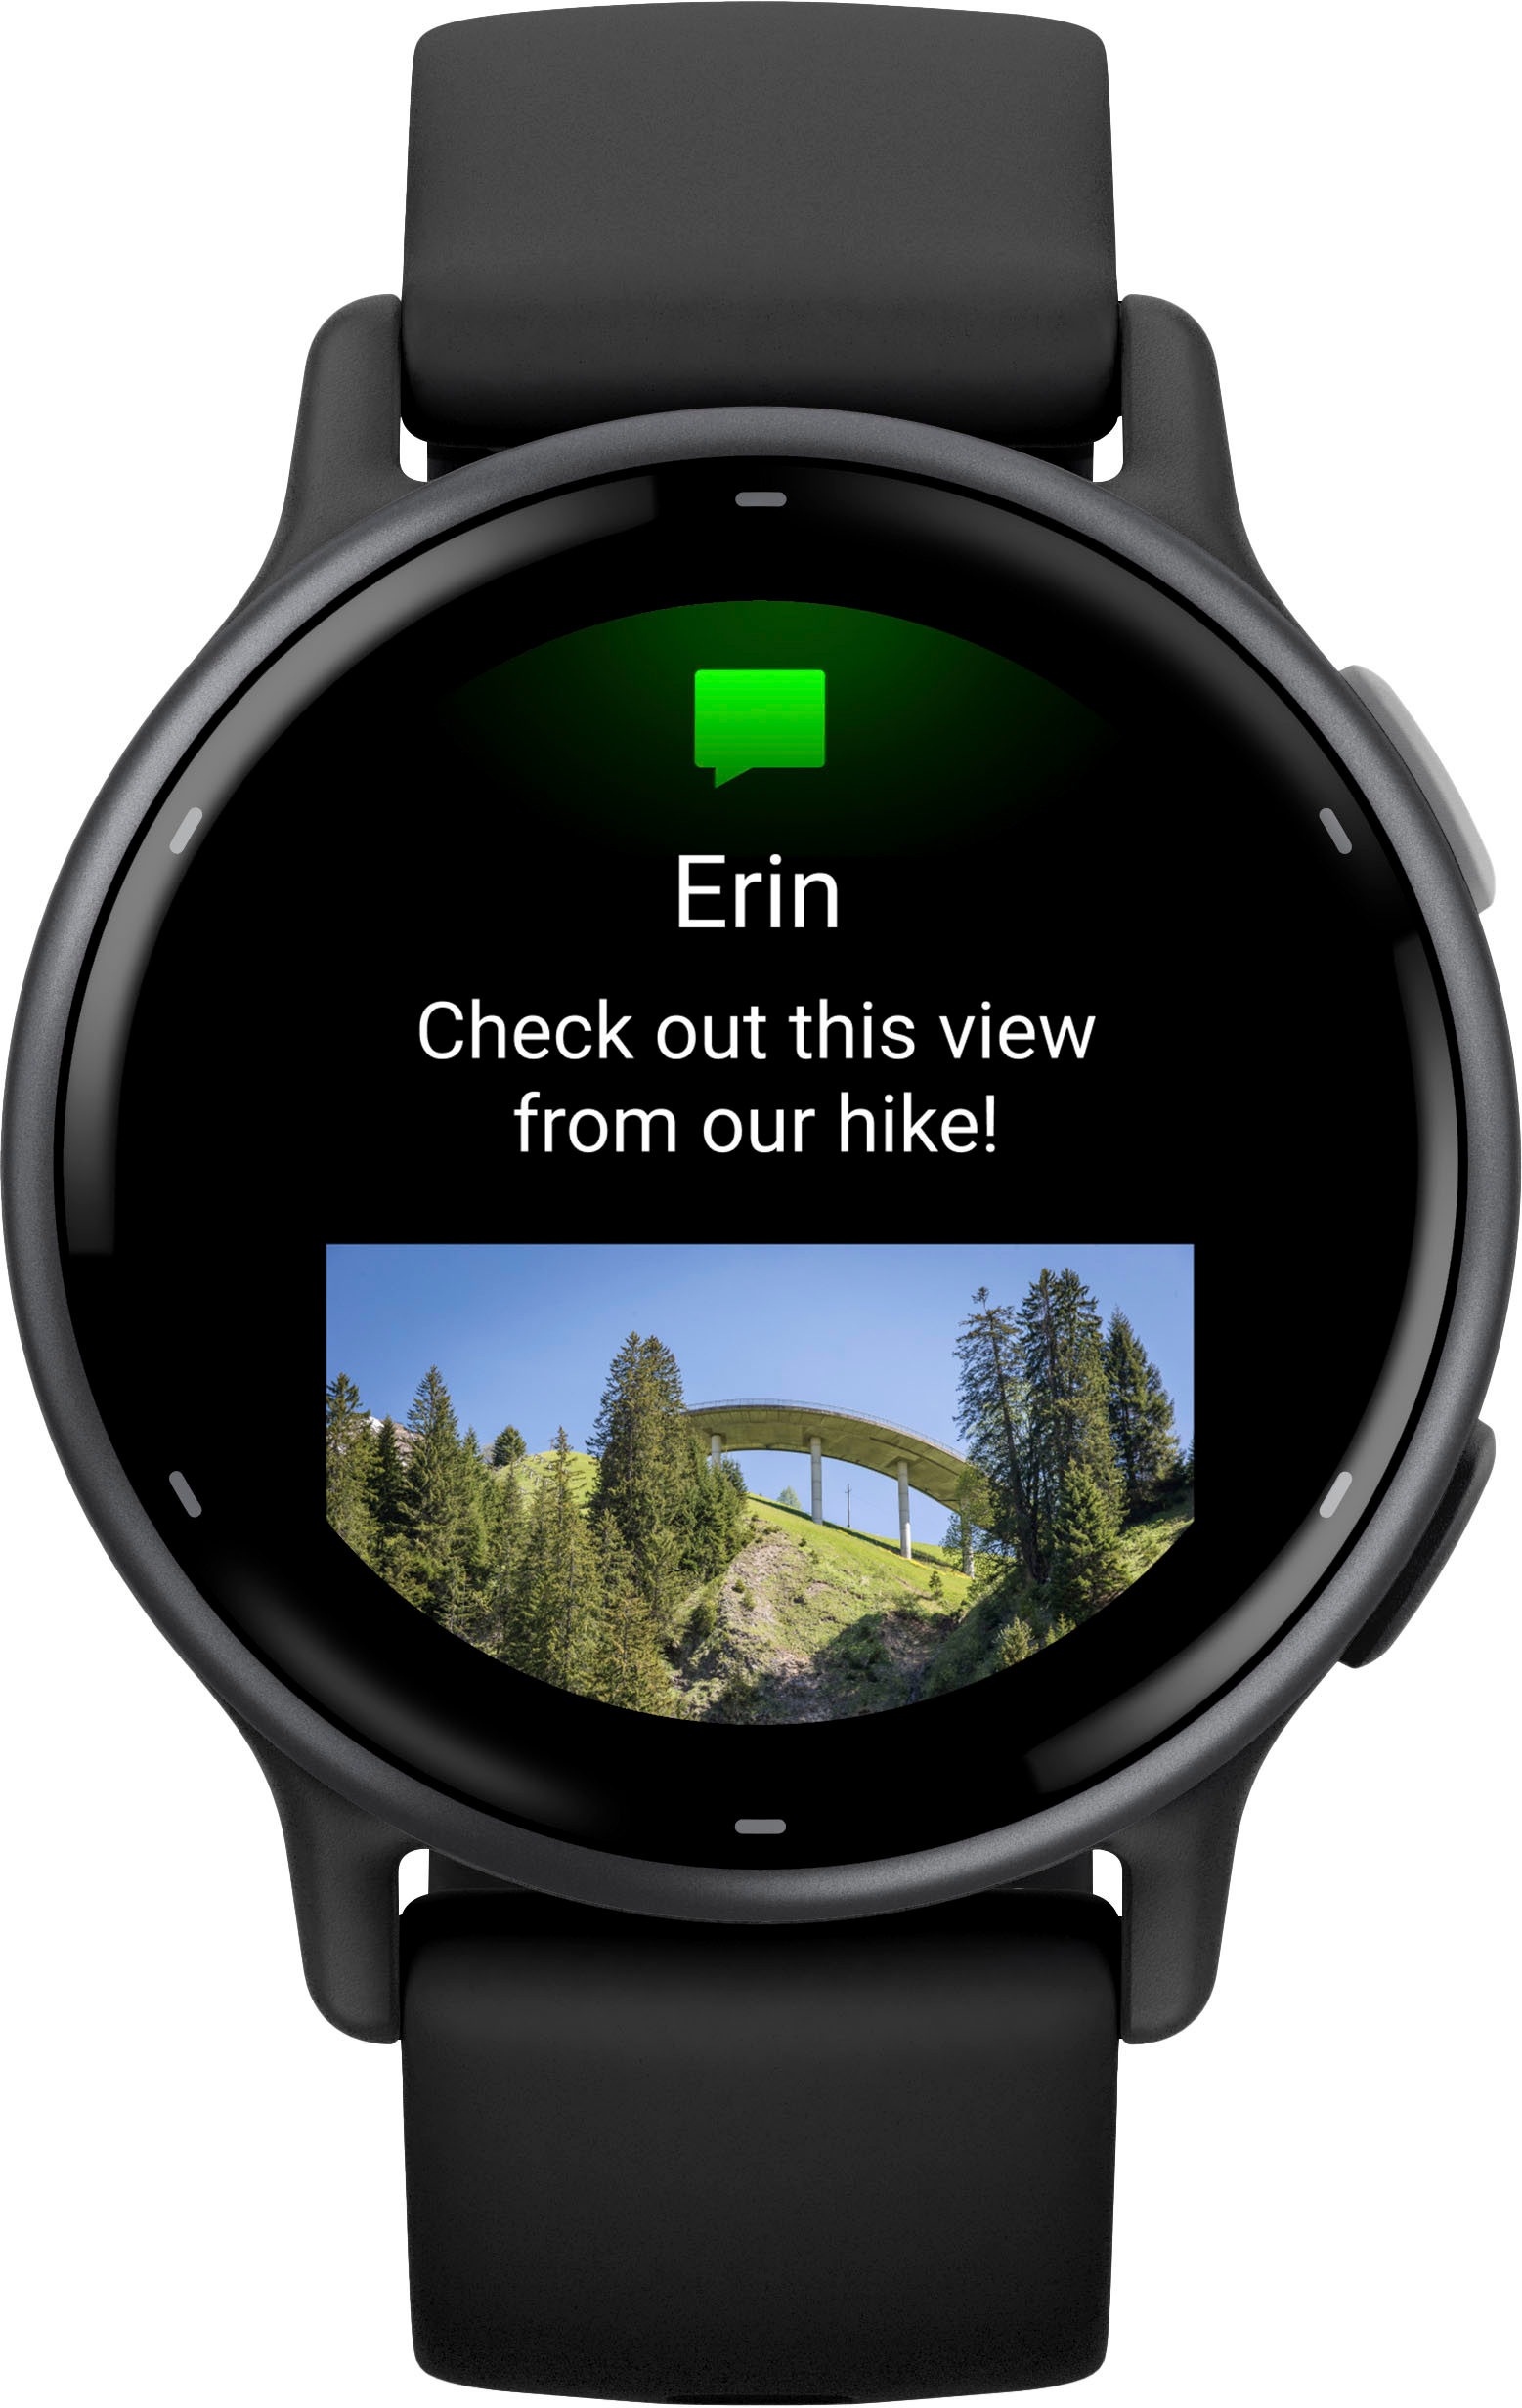 Garmin vivoactive 5 GPS Smartwatch